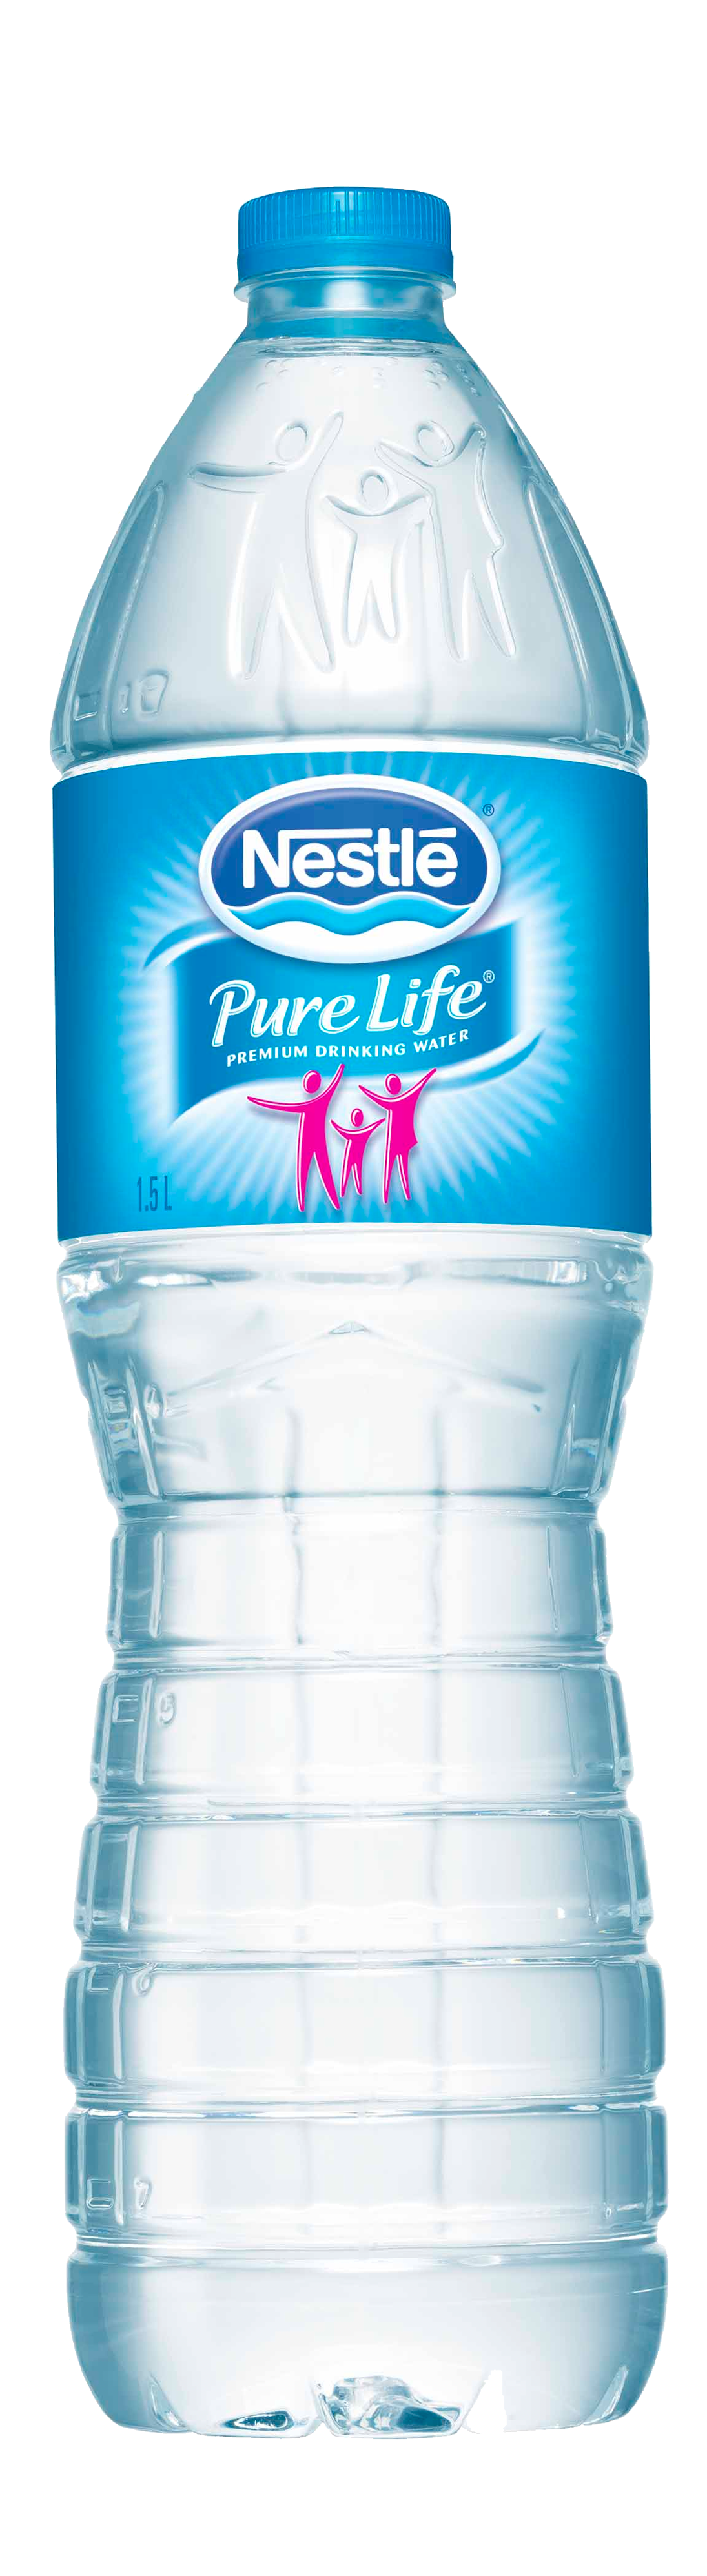 Nestle Water Bottle PNG HD  pngteam.com